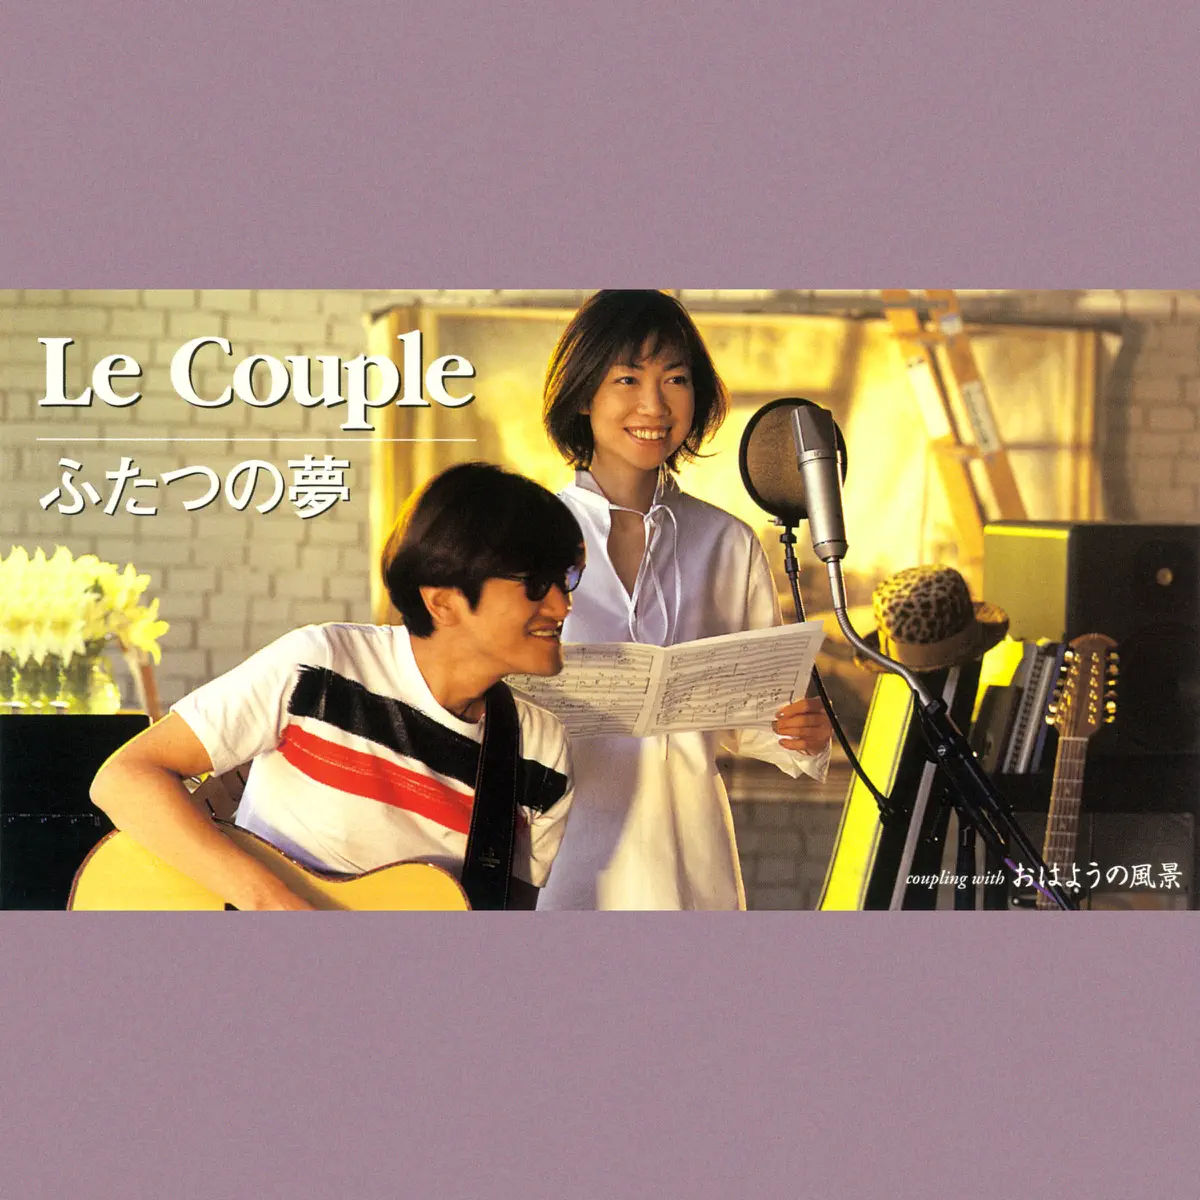 Le Couple - ふたつの夢 - EP (1999) [iTunes Plus AAC M4A]-新房子